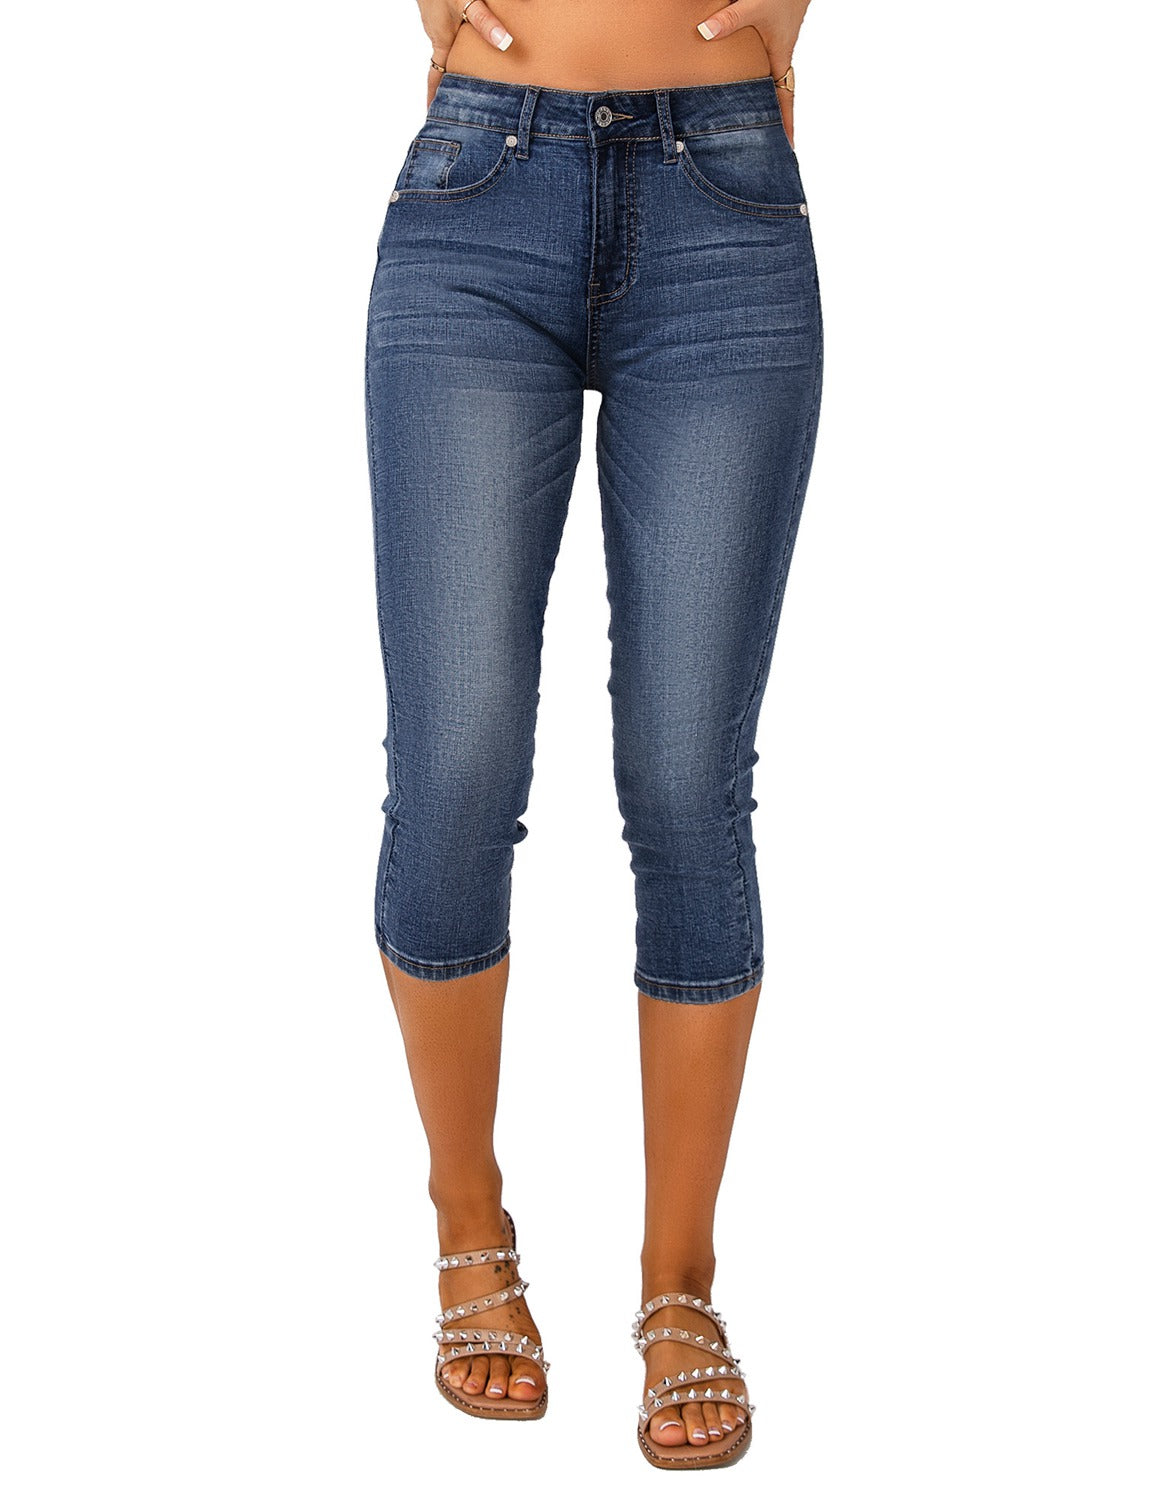 Vetinee Women's Slim Fit Stretch Jeans High Waisted Casual Slim Fit Denim  Capri Pants Size XL